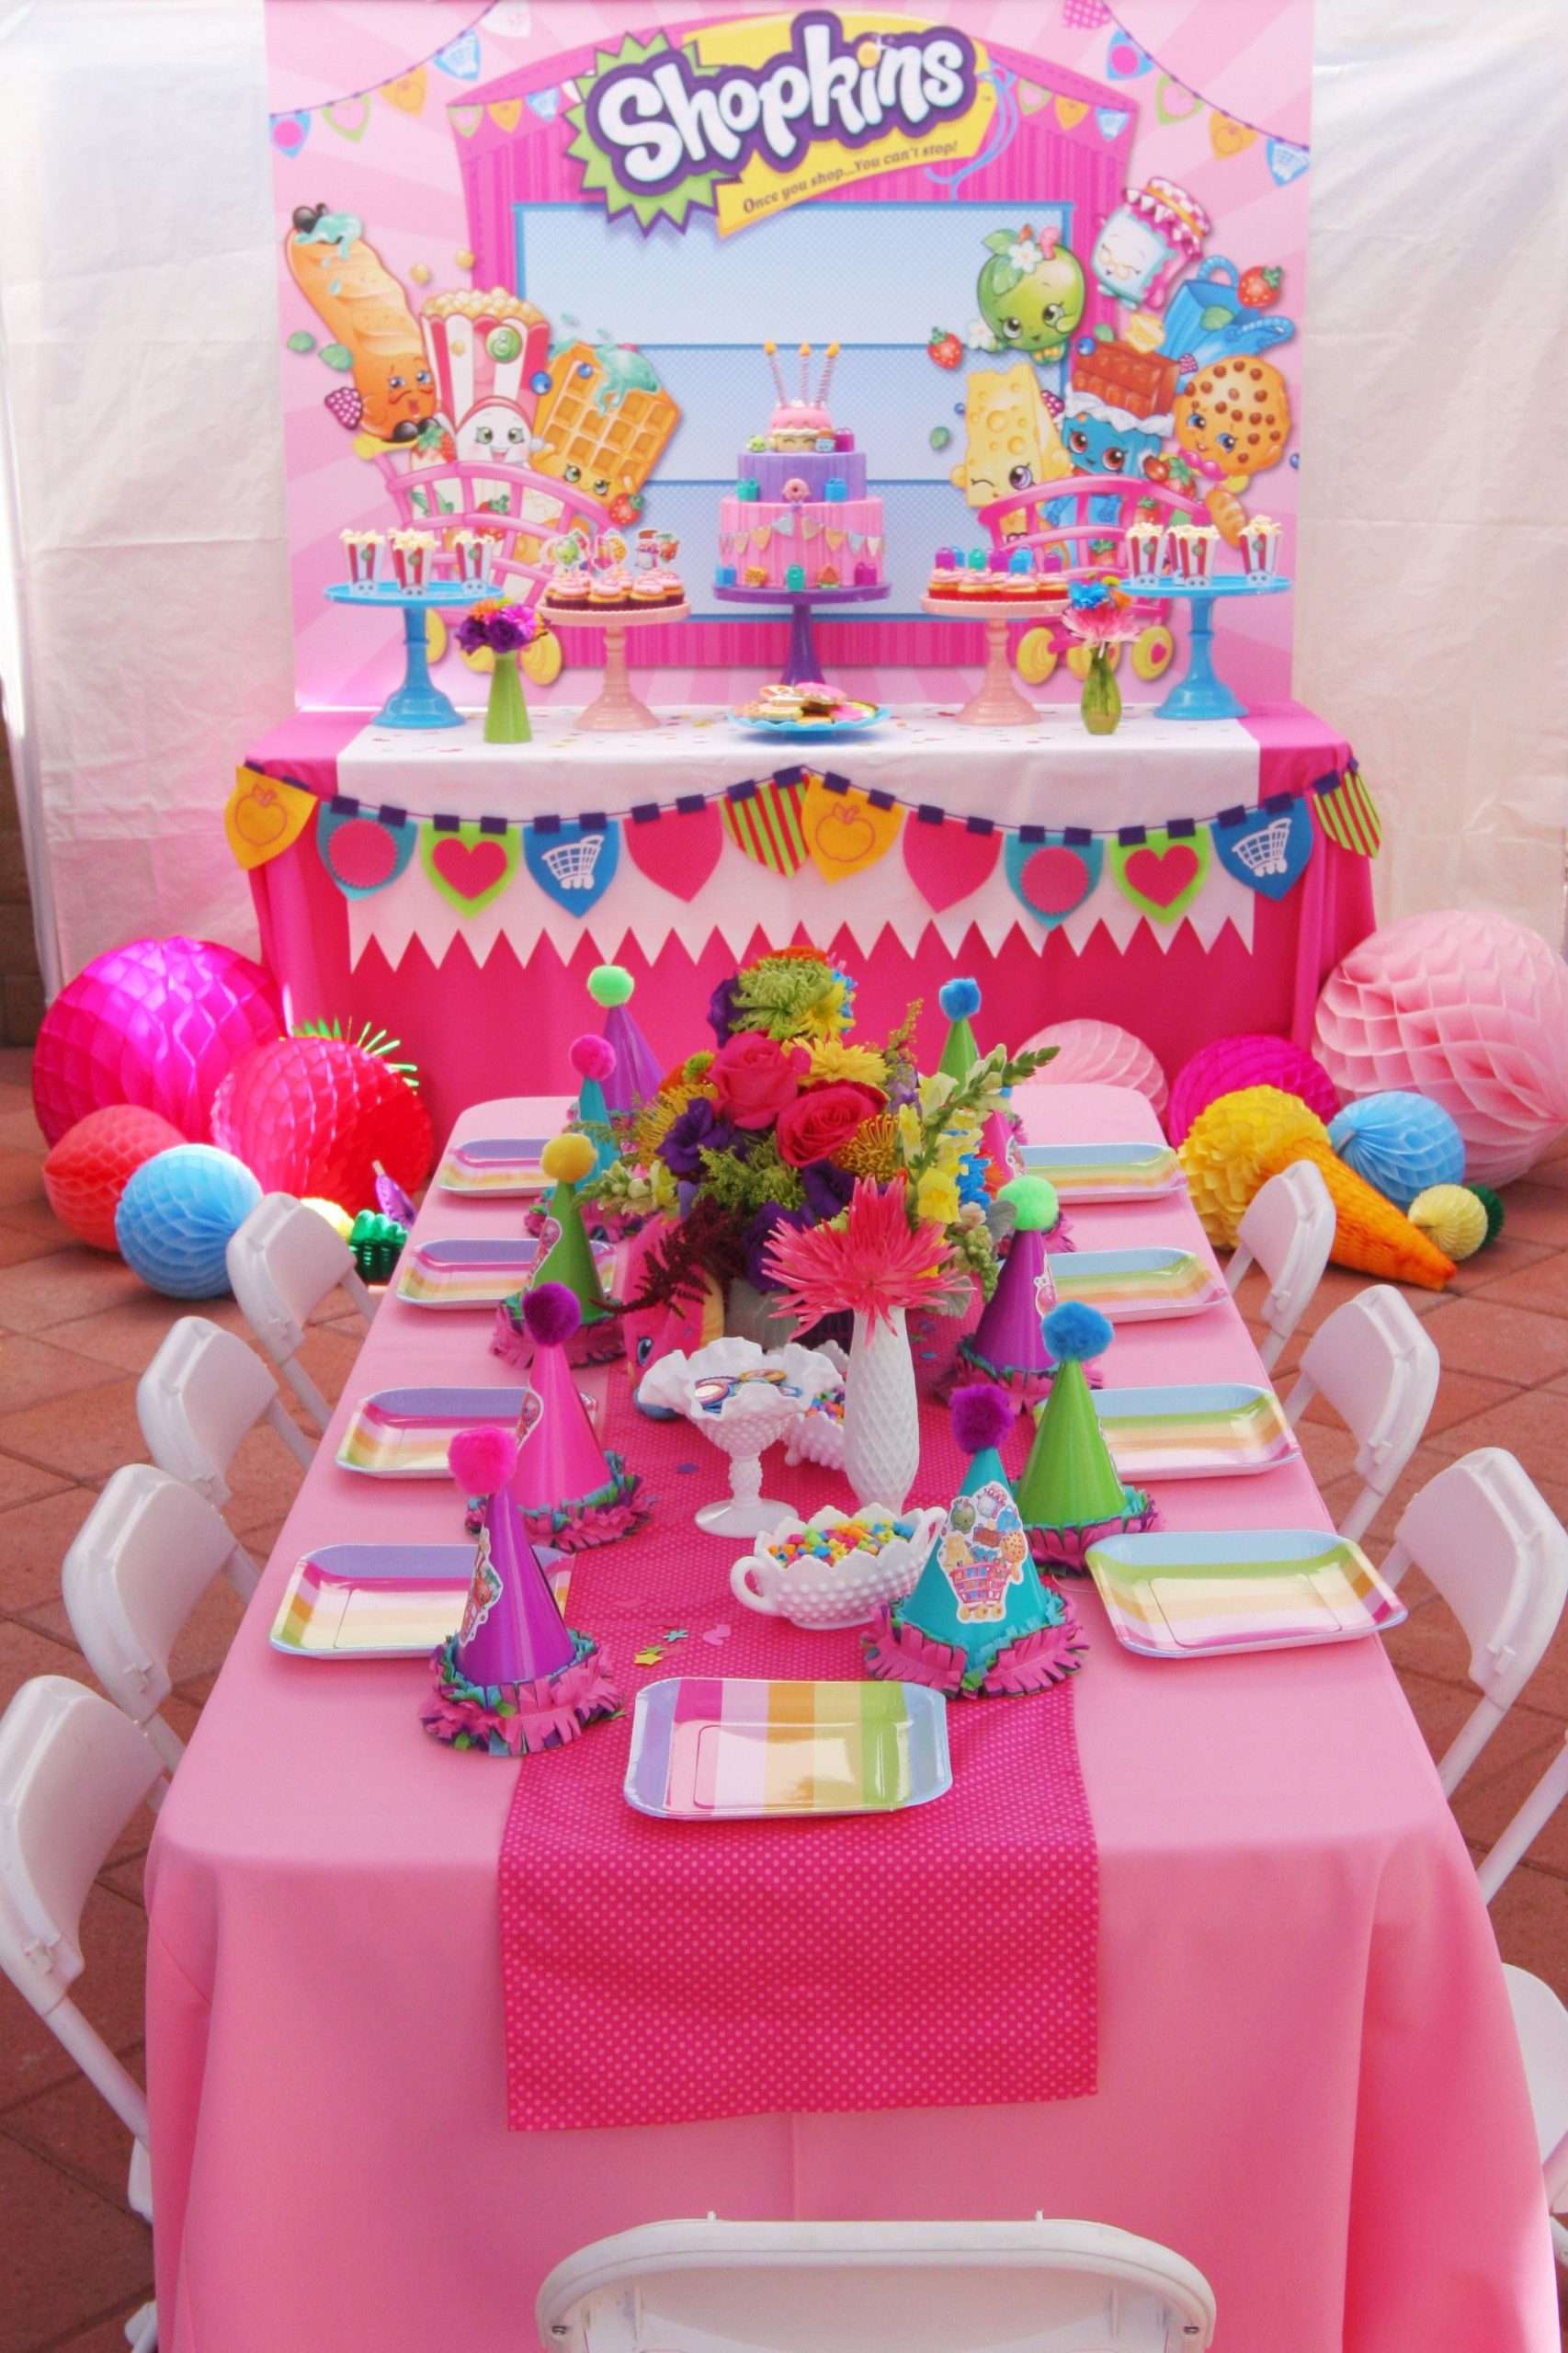 6 Yr Old Girl Birthday Party Ideas Shopkins Birthday Party ...